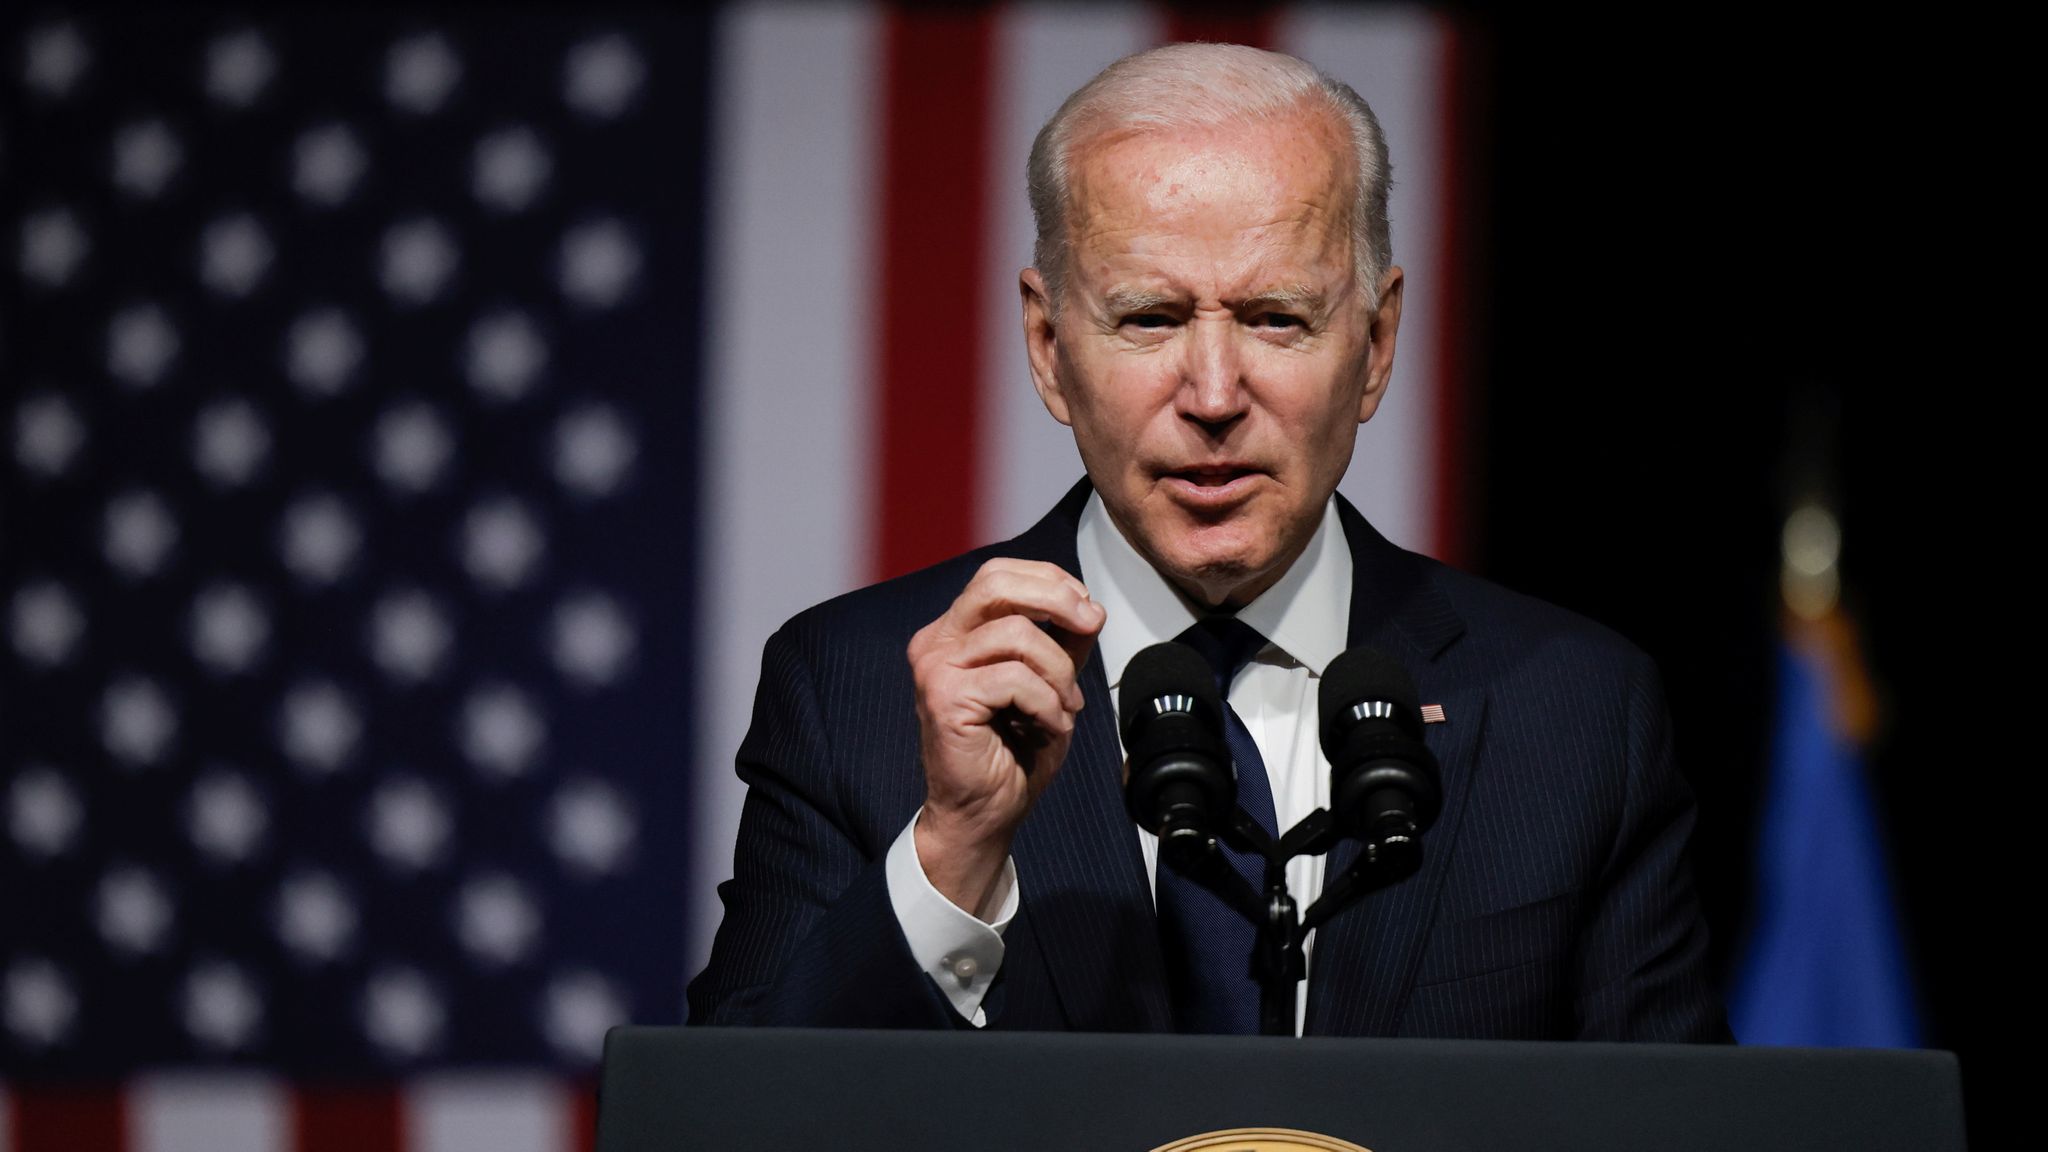 US President Joe Biden Becomes First President To Honor 'Tulsa Race Massacre'